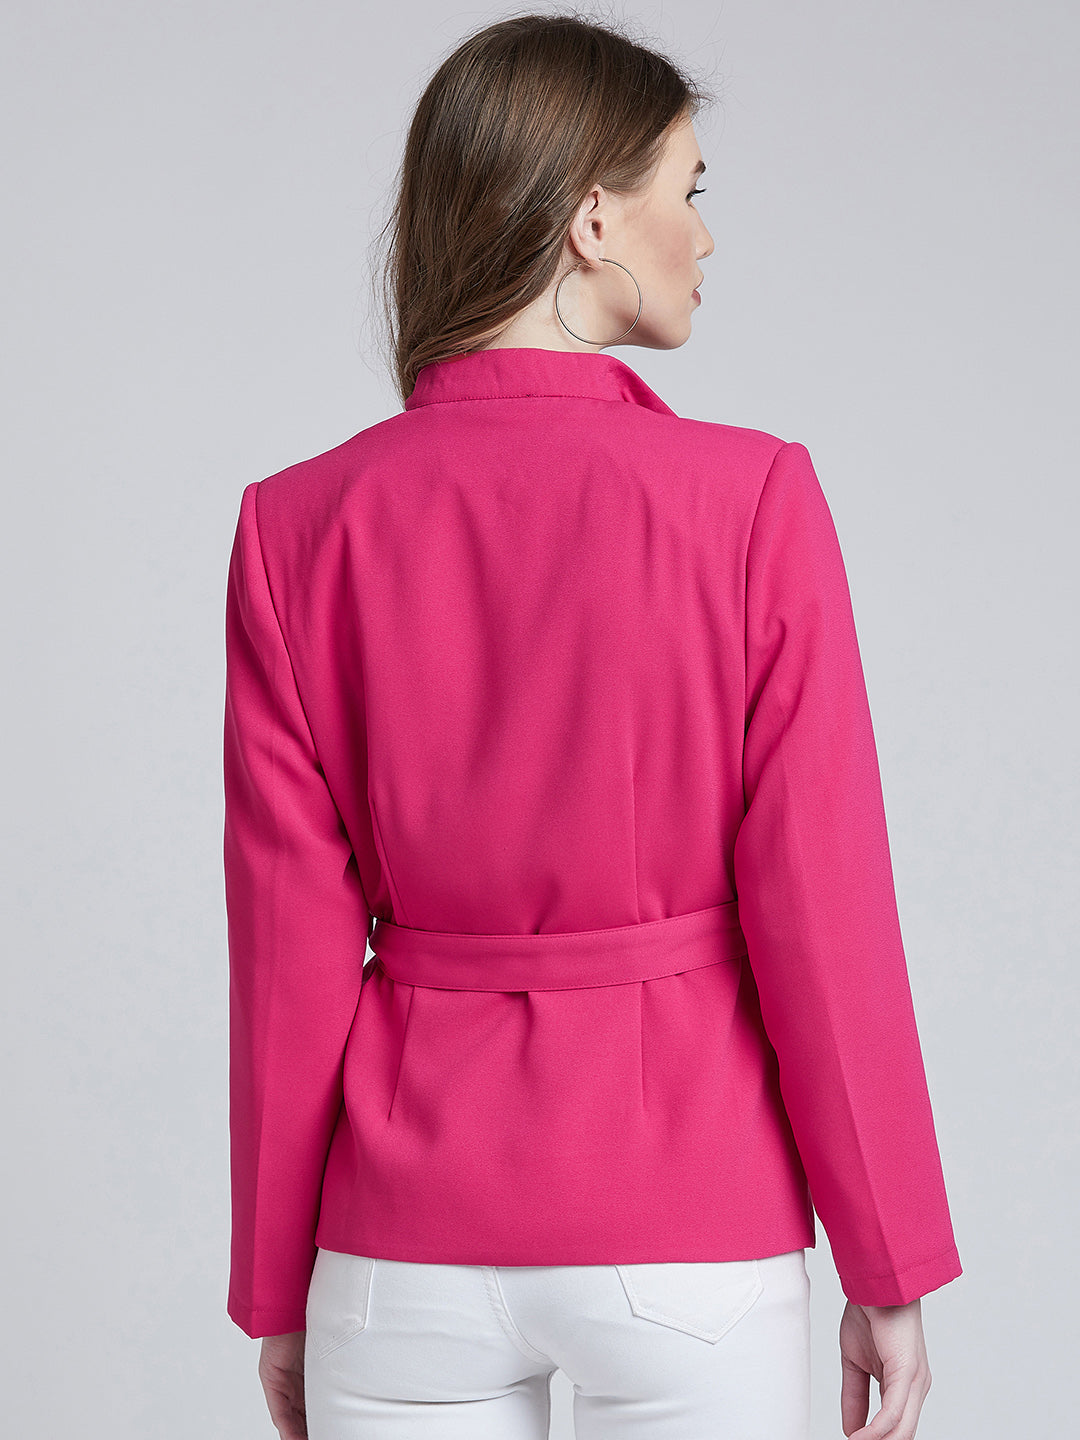 Rosy Pink Jacket